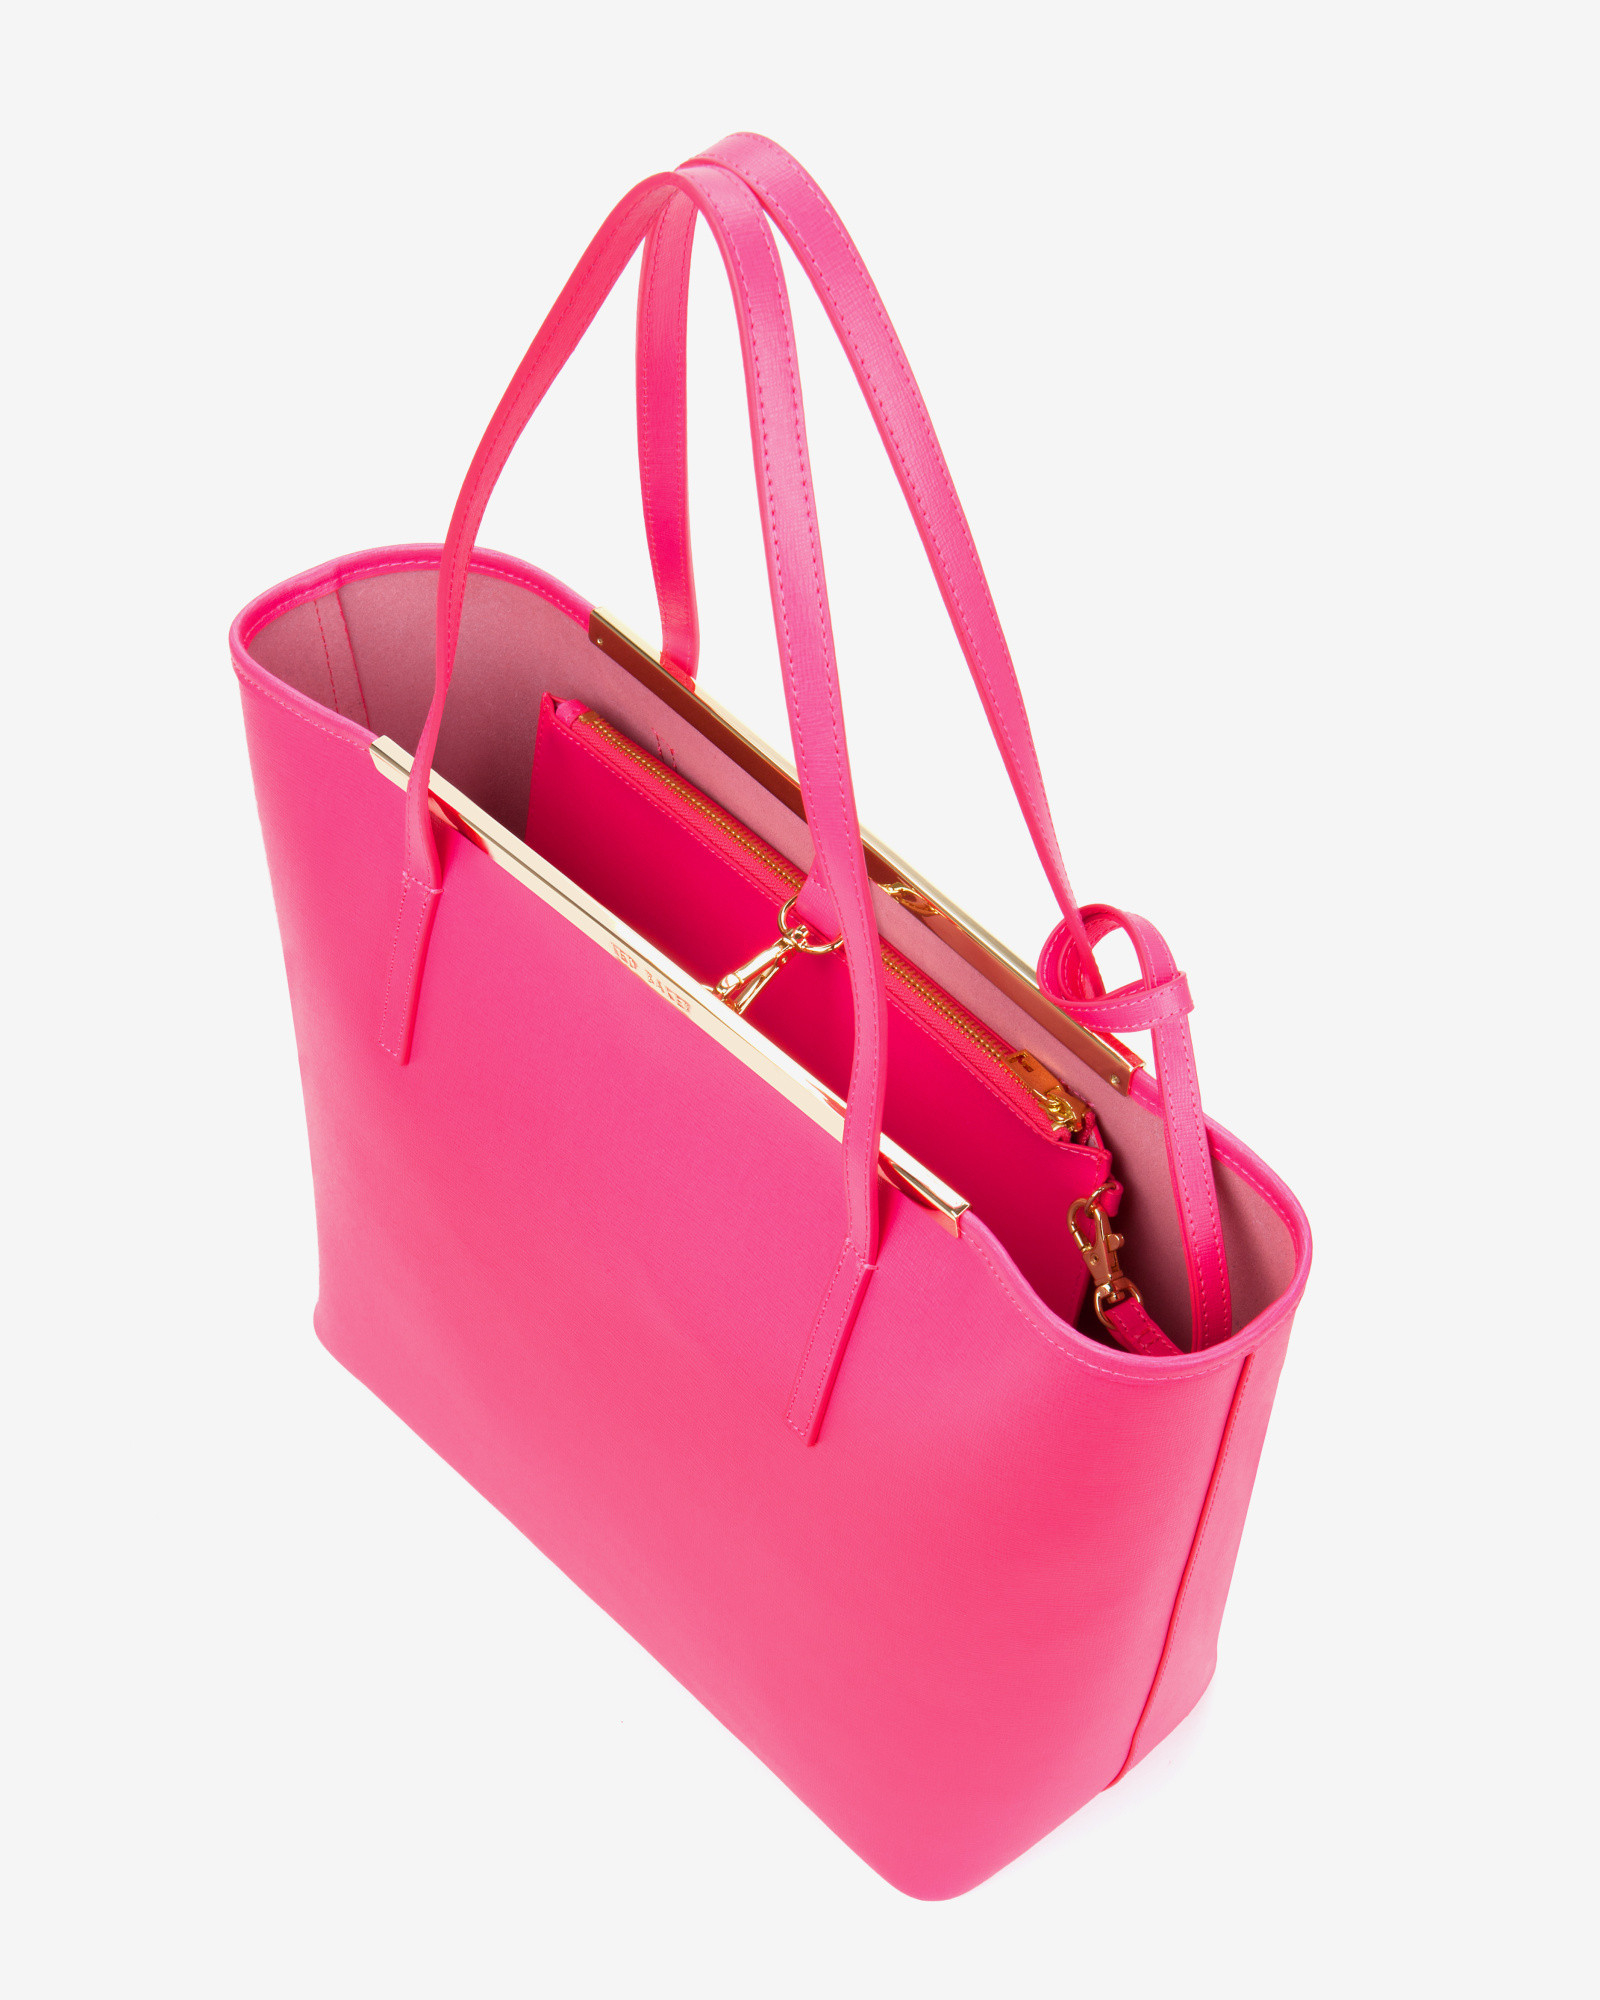 Ted Baker Crosshatch Leather Shopper Bag in Pink - Lyst